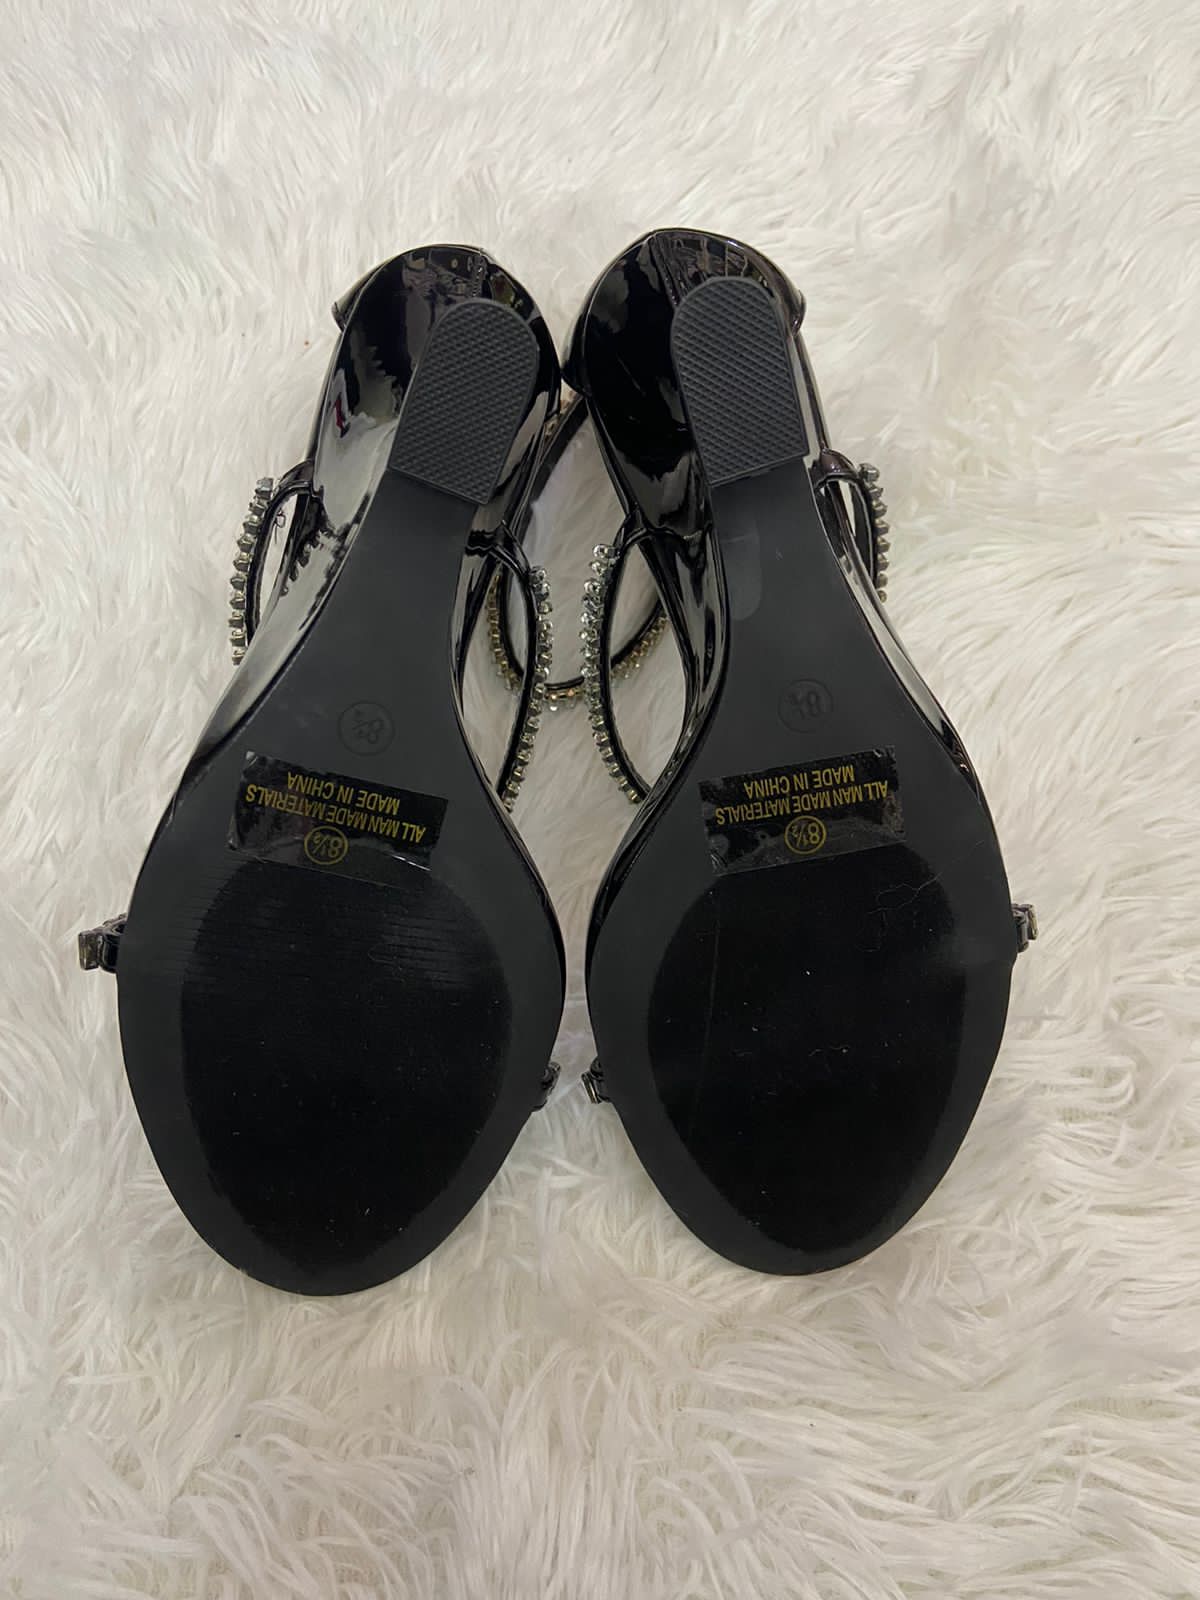 Zapatillas Fashion Nova original, negras con cadenas plateadas, tacón en forma de S.